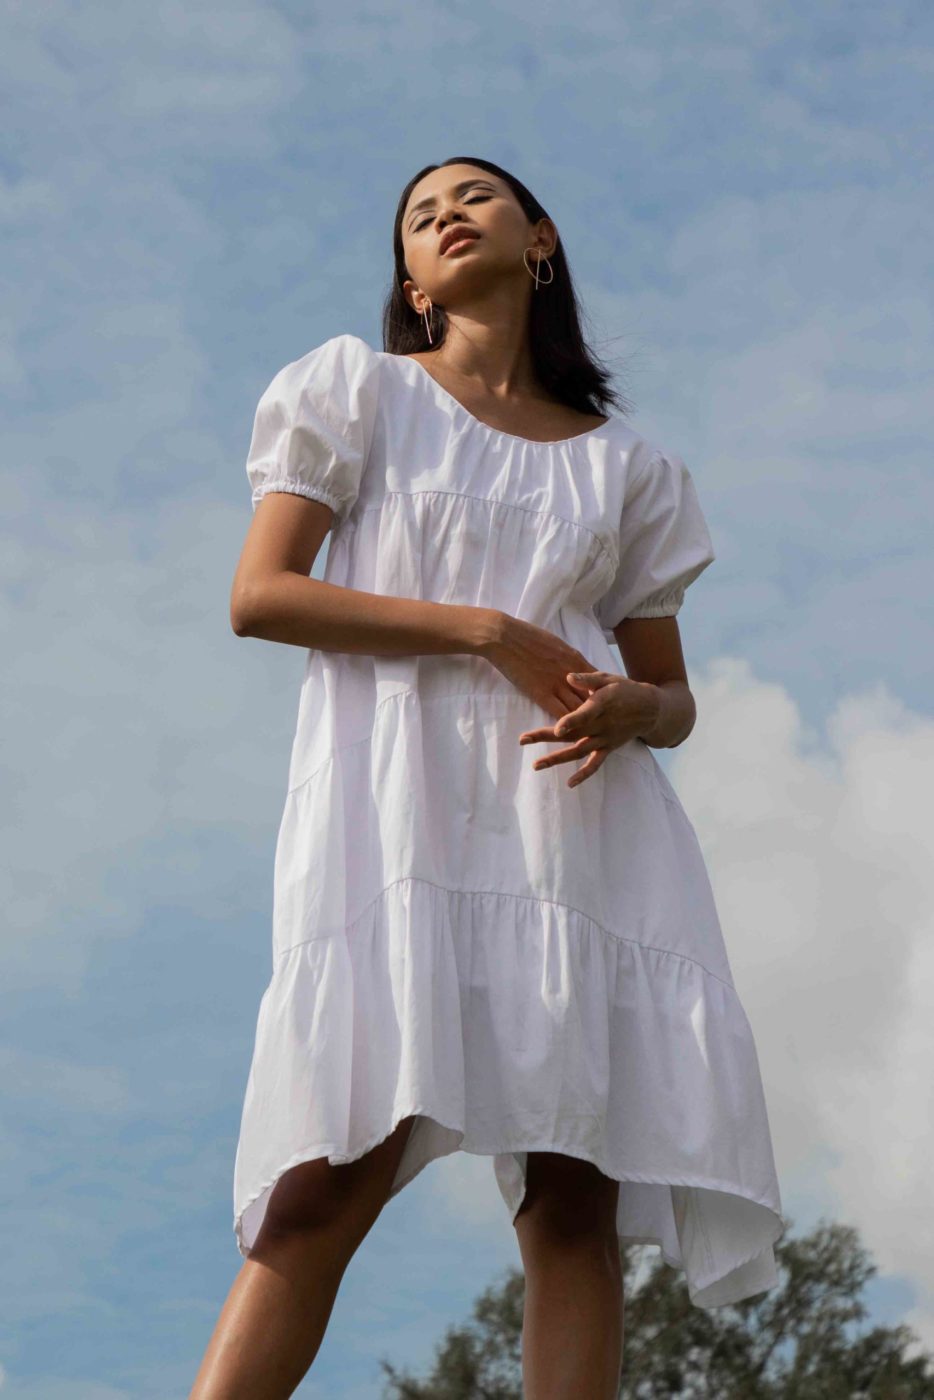 tanisha khan basic models indian malay pakistan model singapore fashion commercial